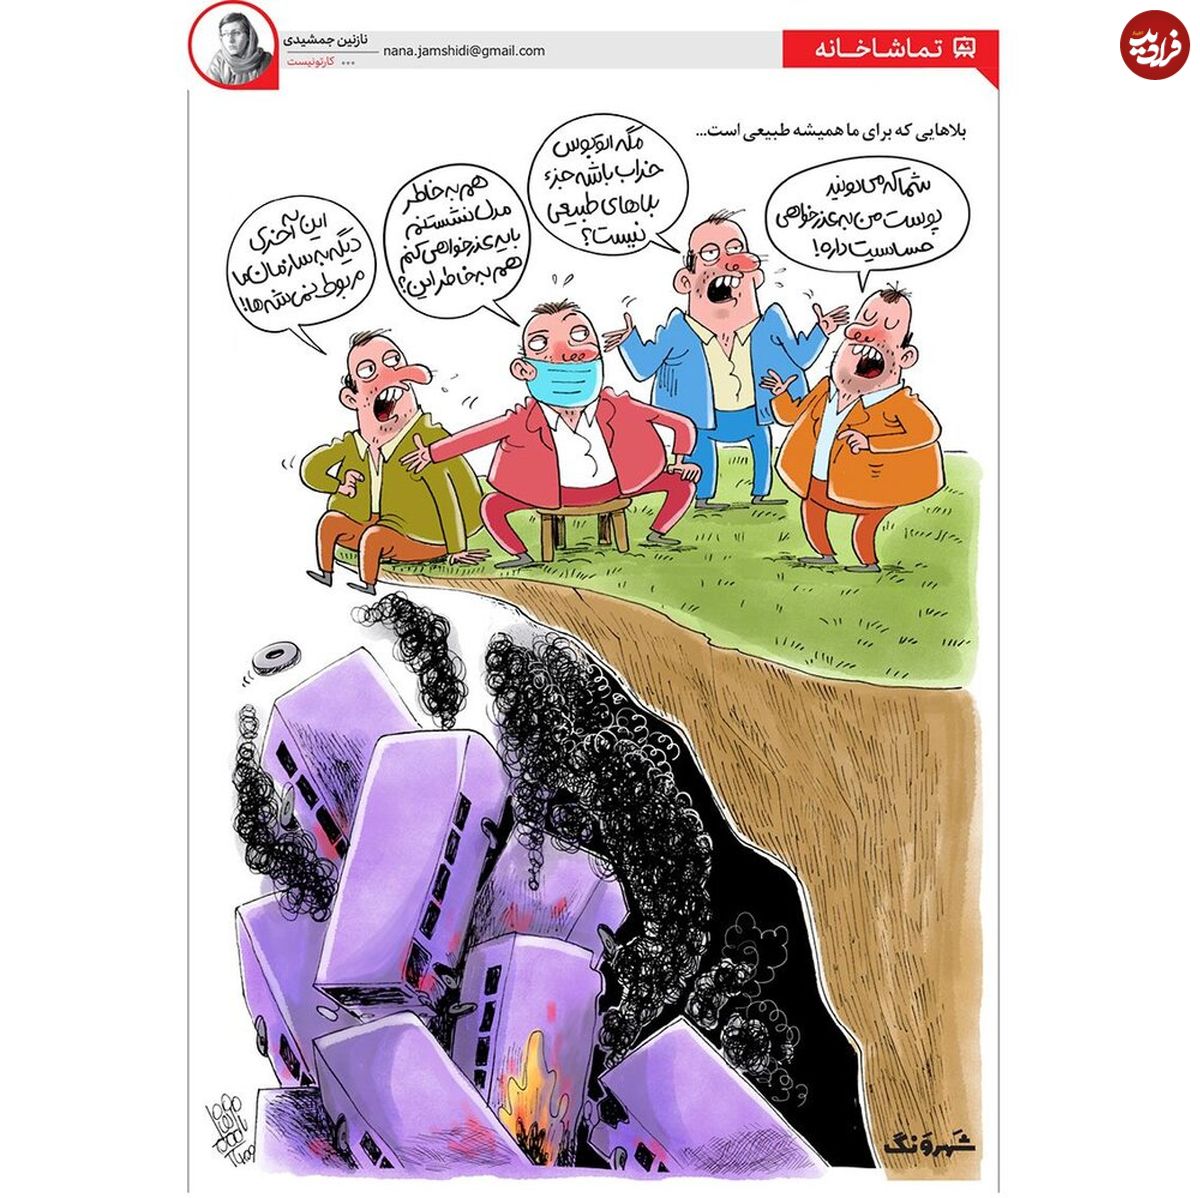 کارتون/ واکنش‌های عجیب به واژگونی اتوبوس خبرنگاران!